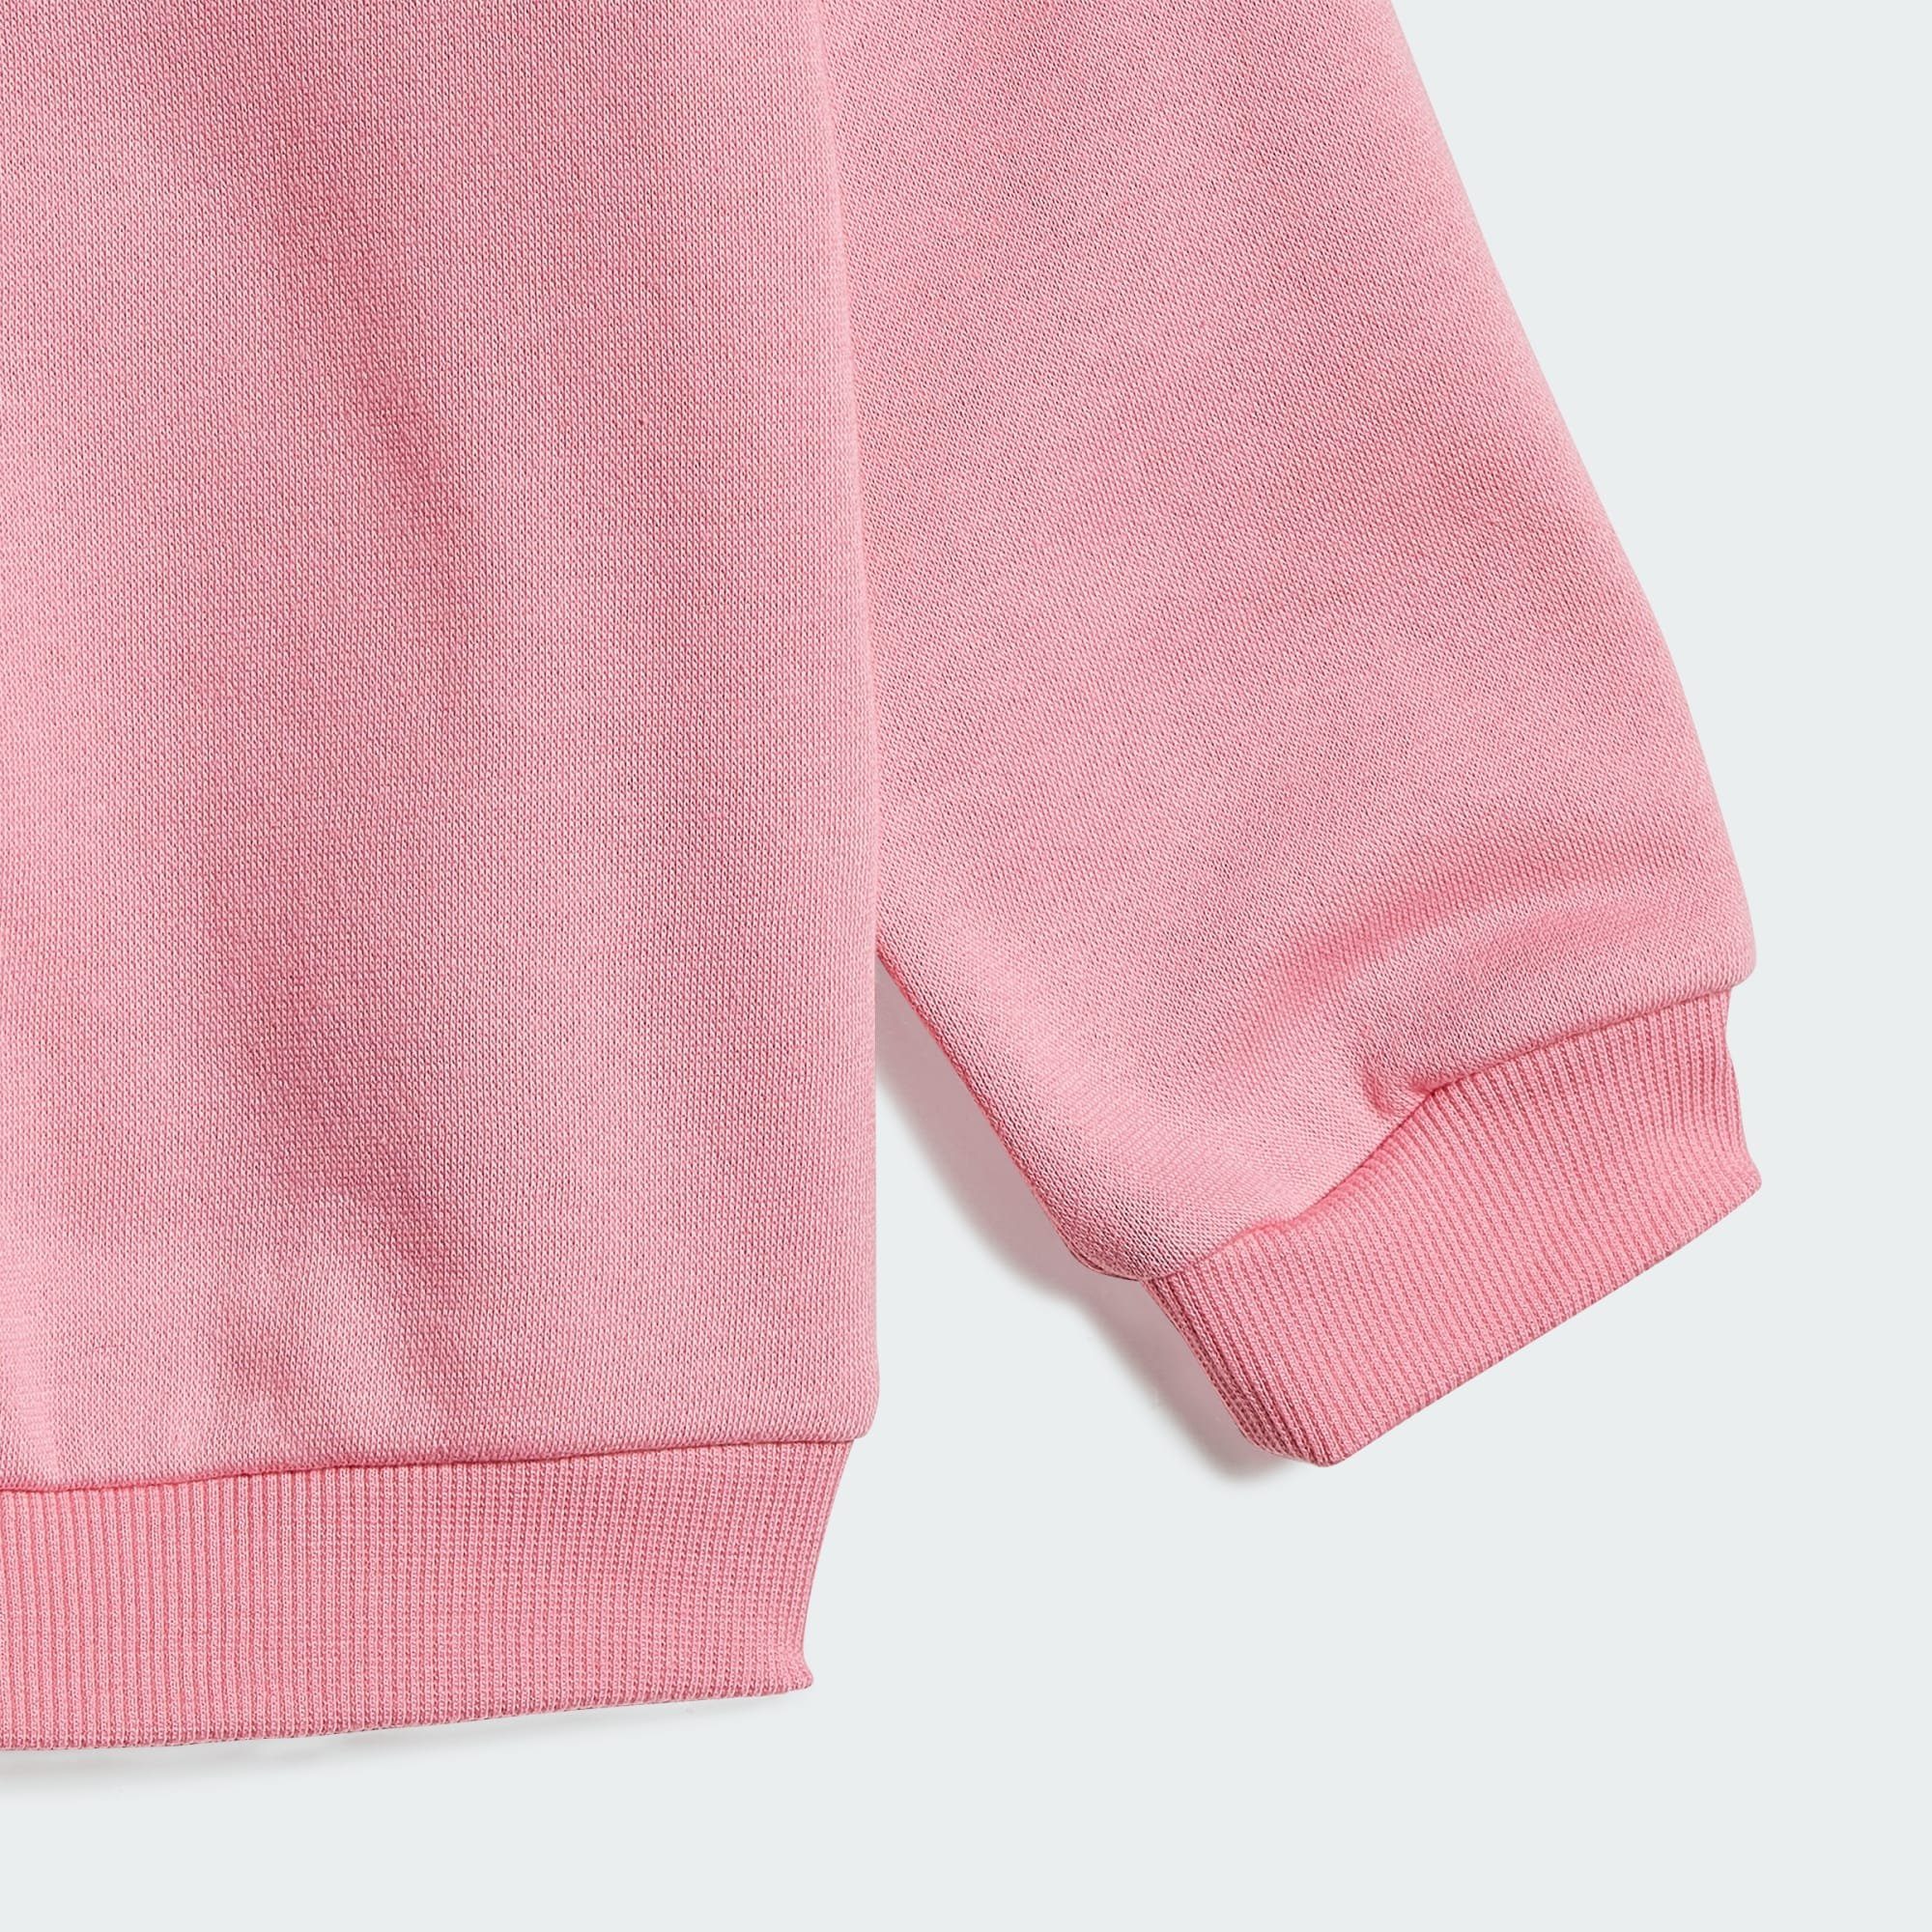 OF adidas Bliss White / SPORT Trainingsanzug JOGGINGANZUG BADGE Pink Sportswear